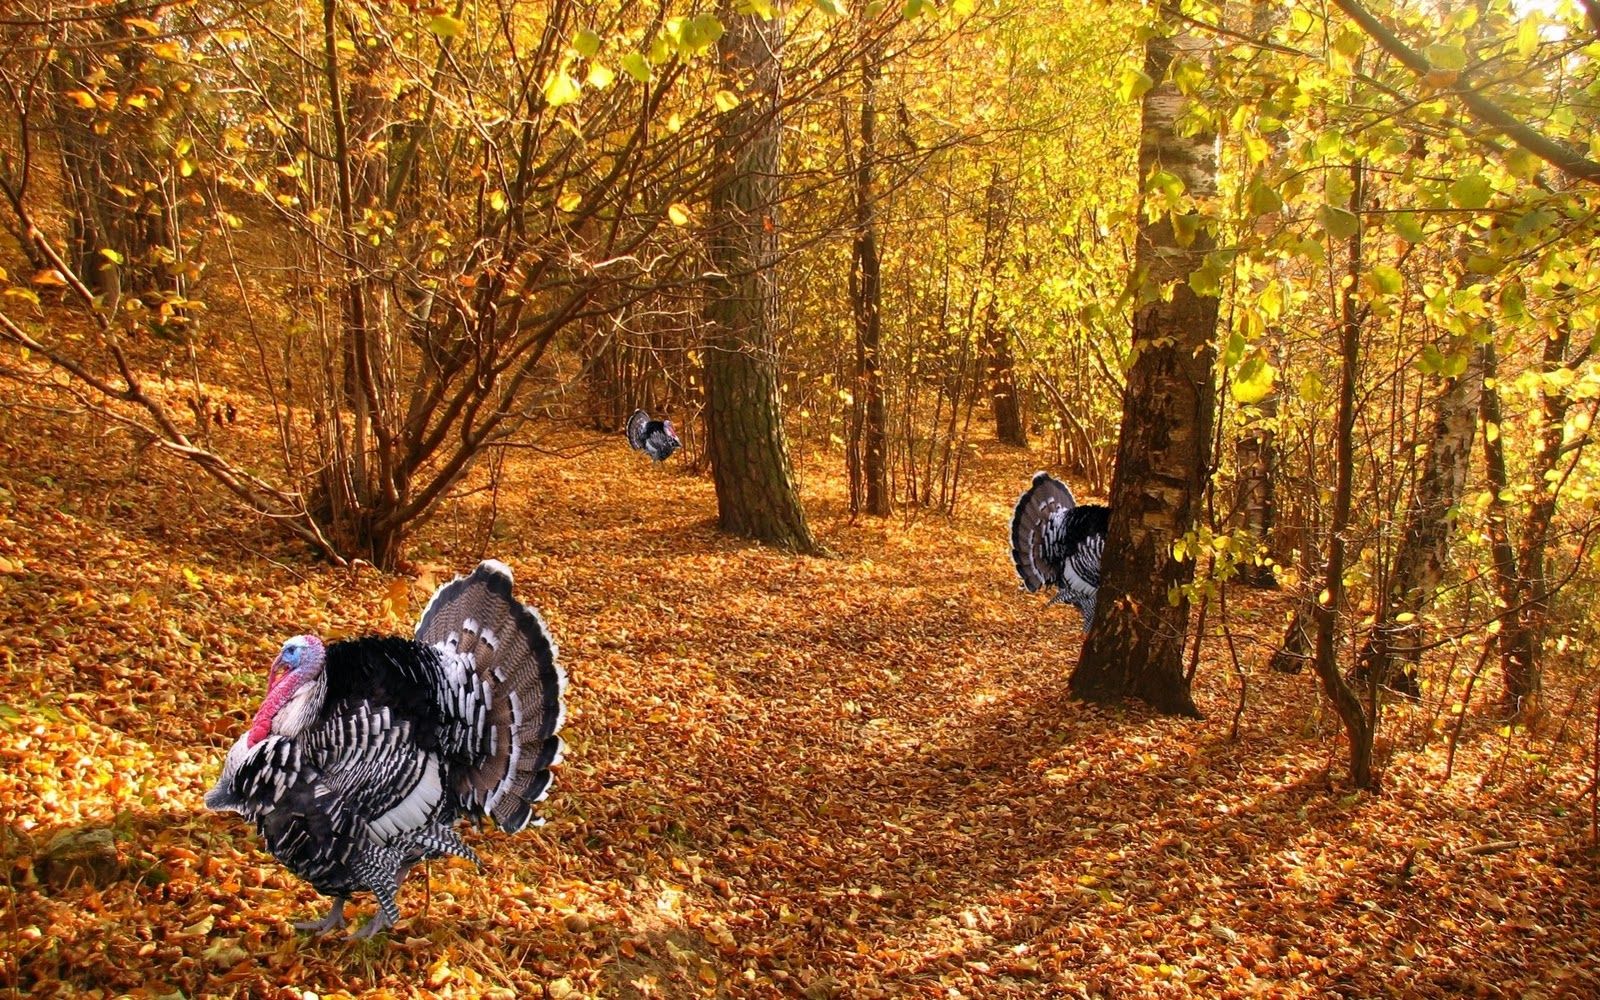 Thanksgiving Background Wallpaper For Desktop Animals